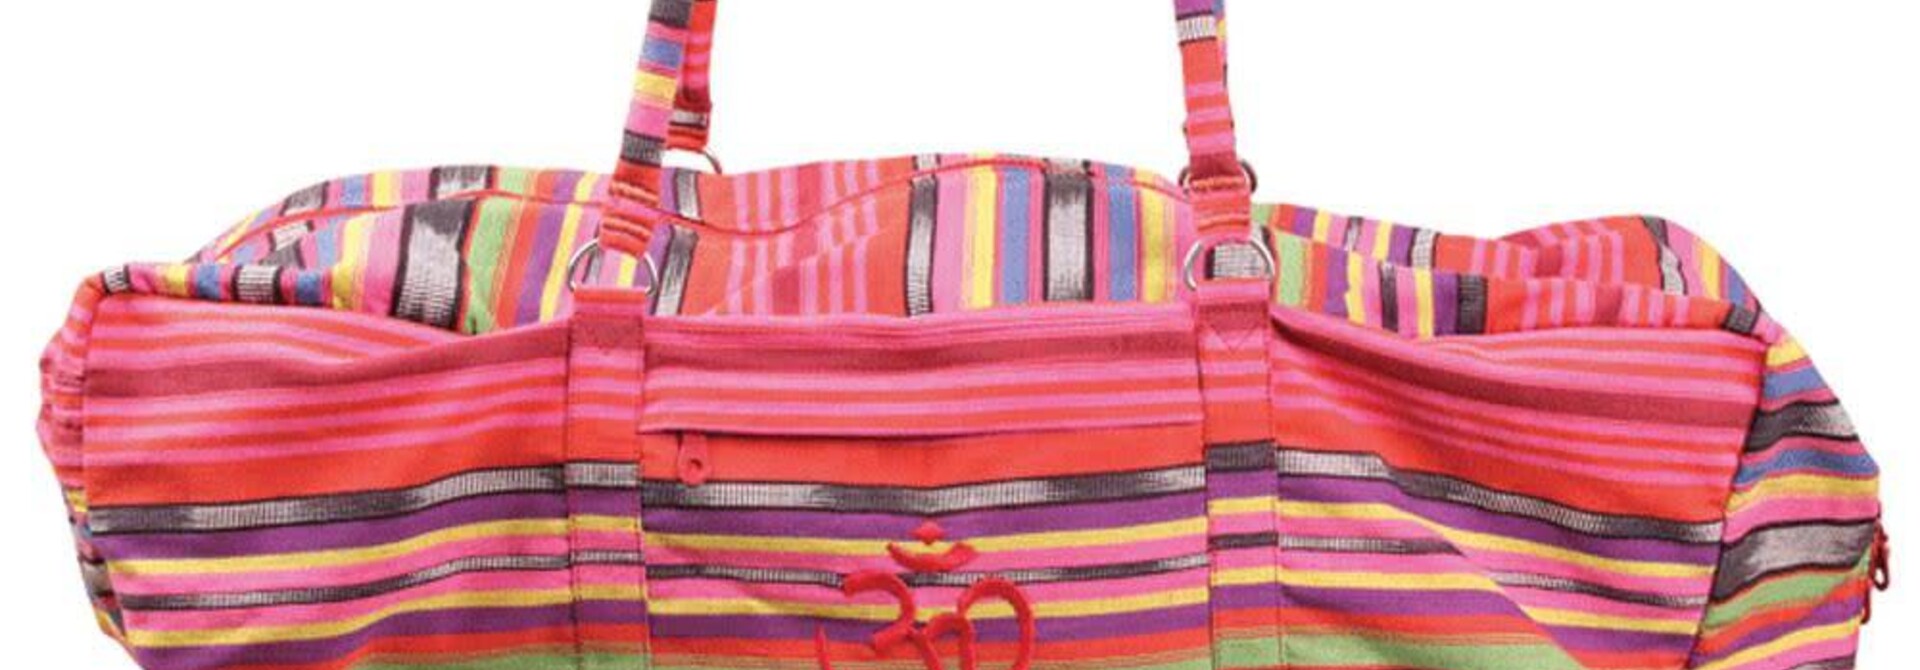 Yoga Kit Bag Deluxe - Pink Stripes